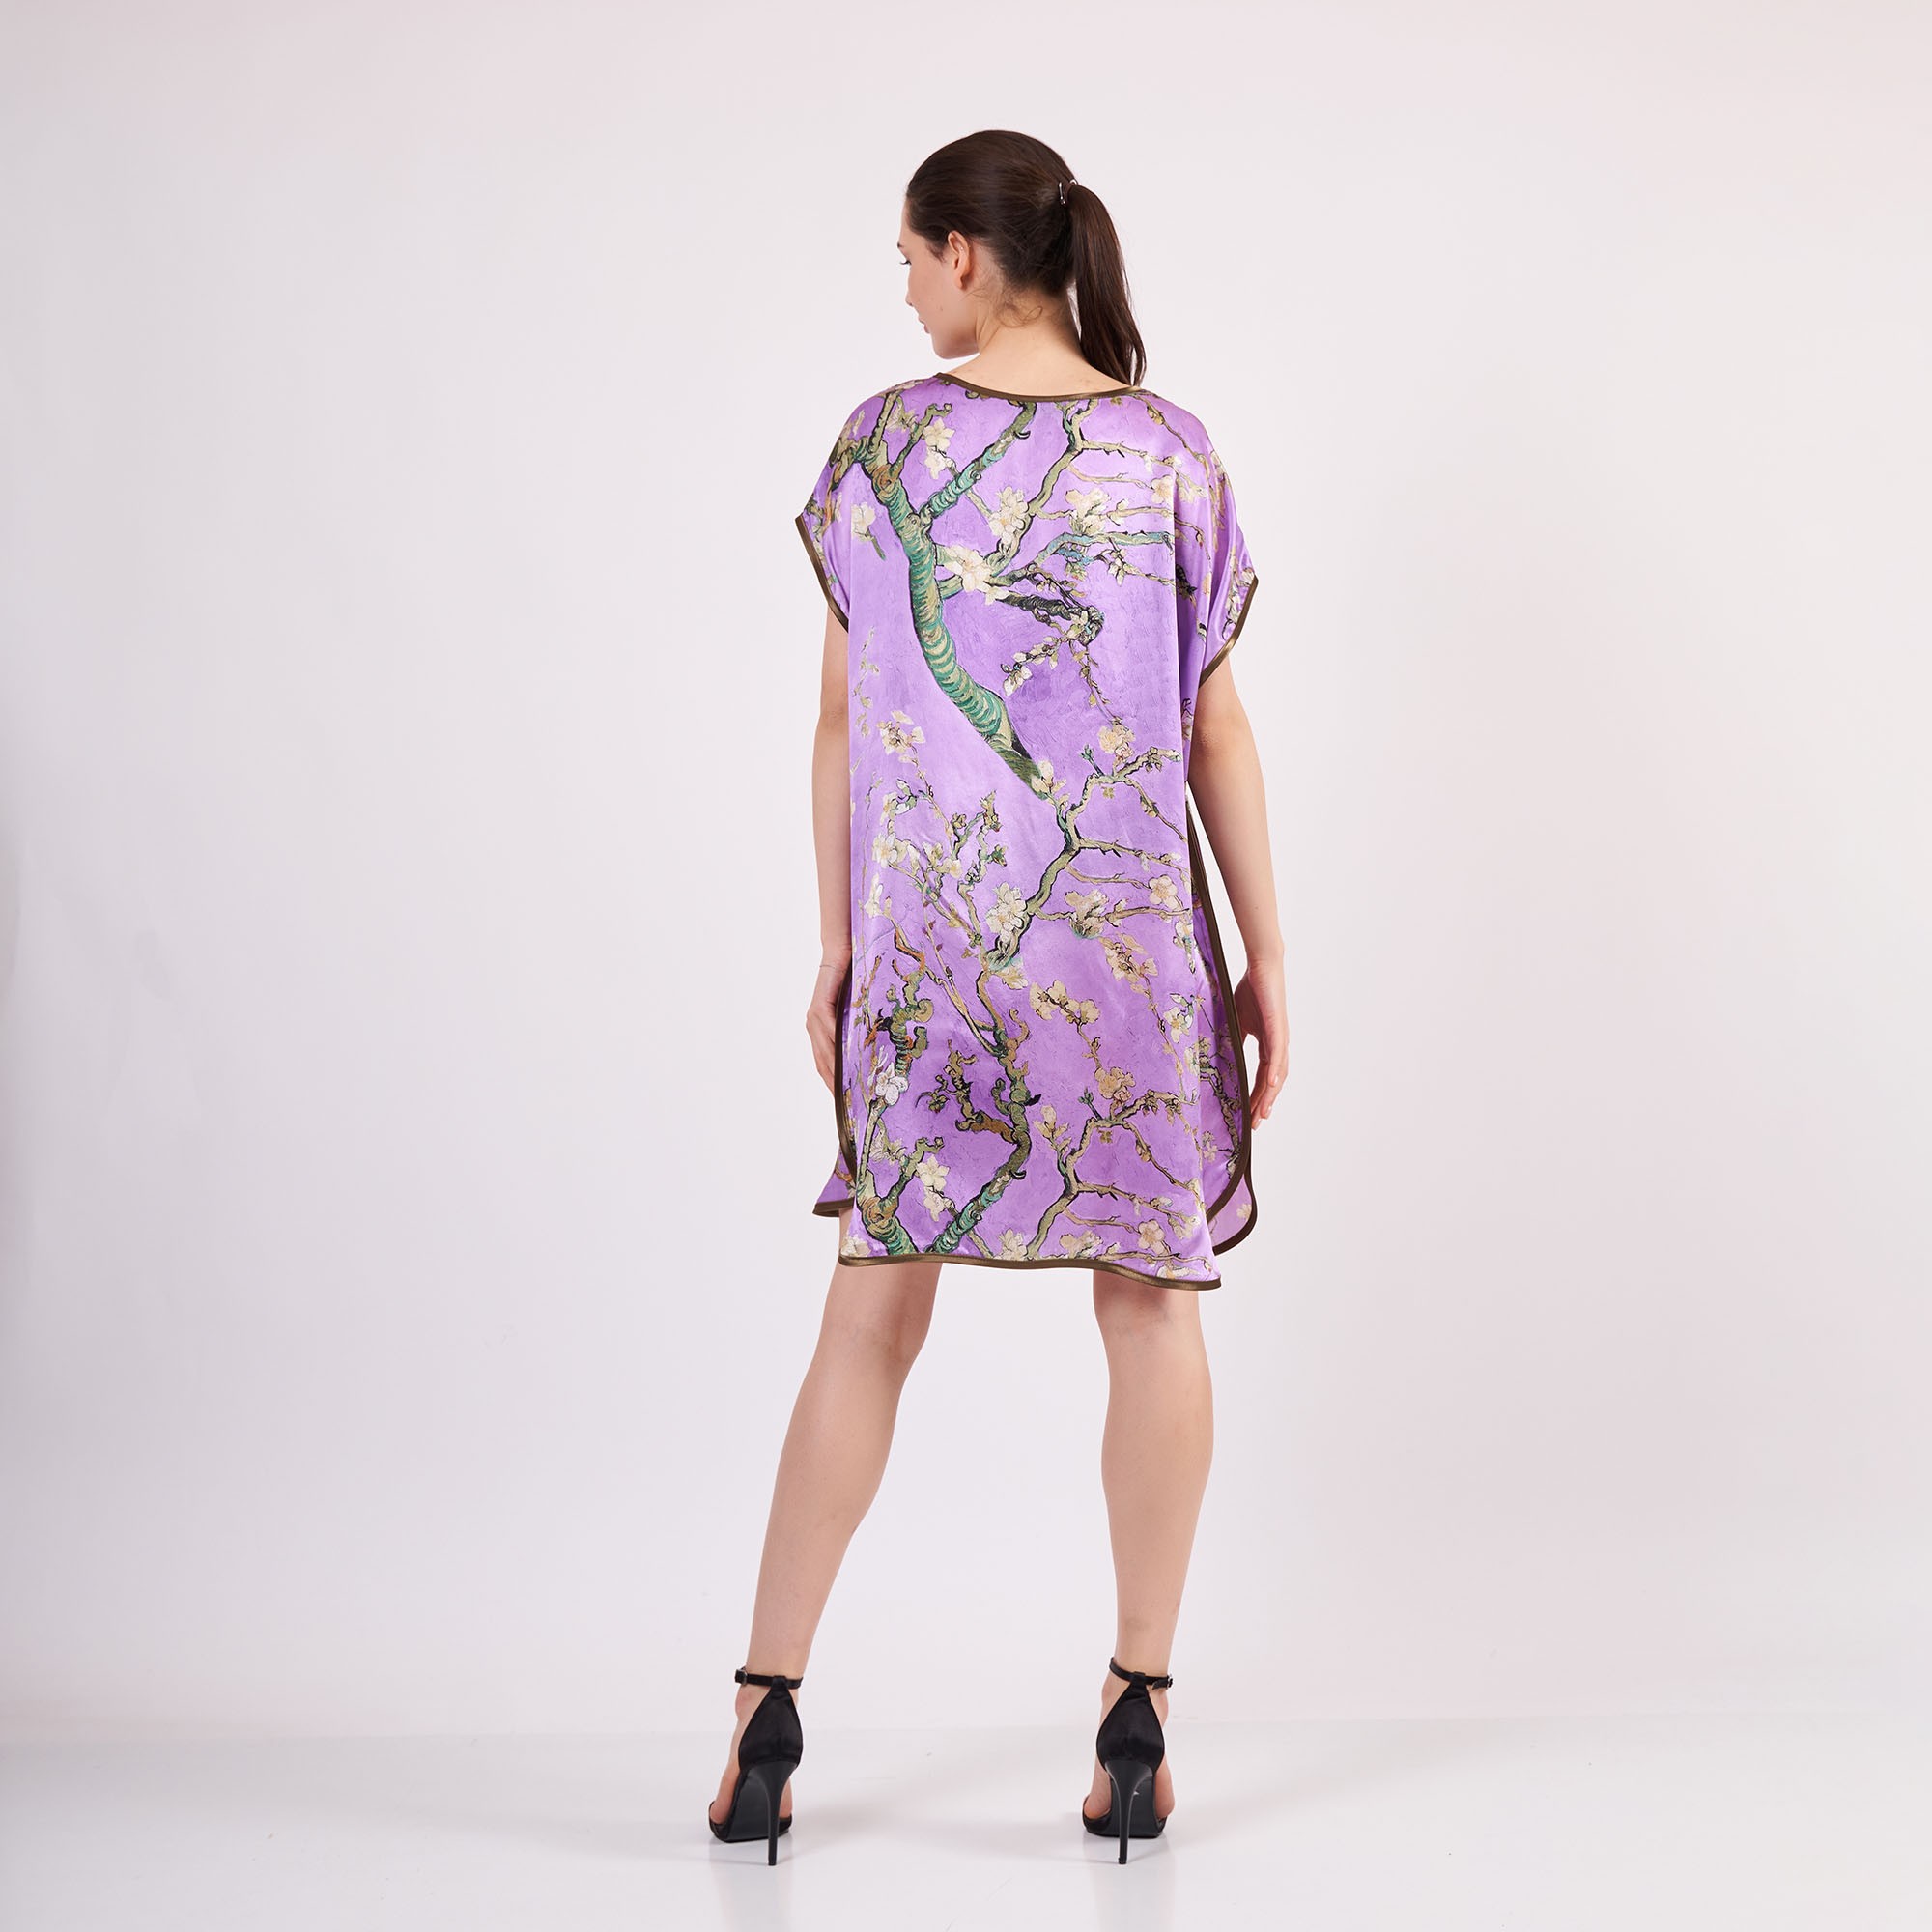 Pure Silk Plus Size Short Dress For Women | Oversized Short Kaftan Purple Van Gogh Almond Blossoms | Loose Fitting Dress